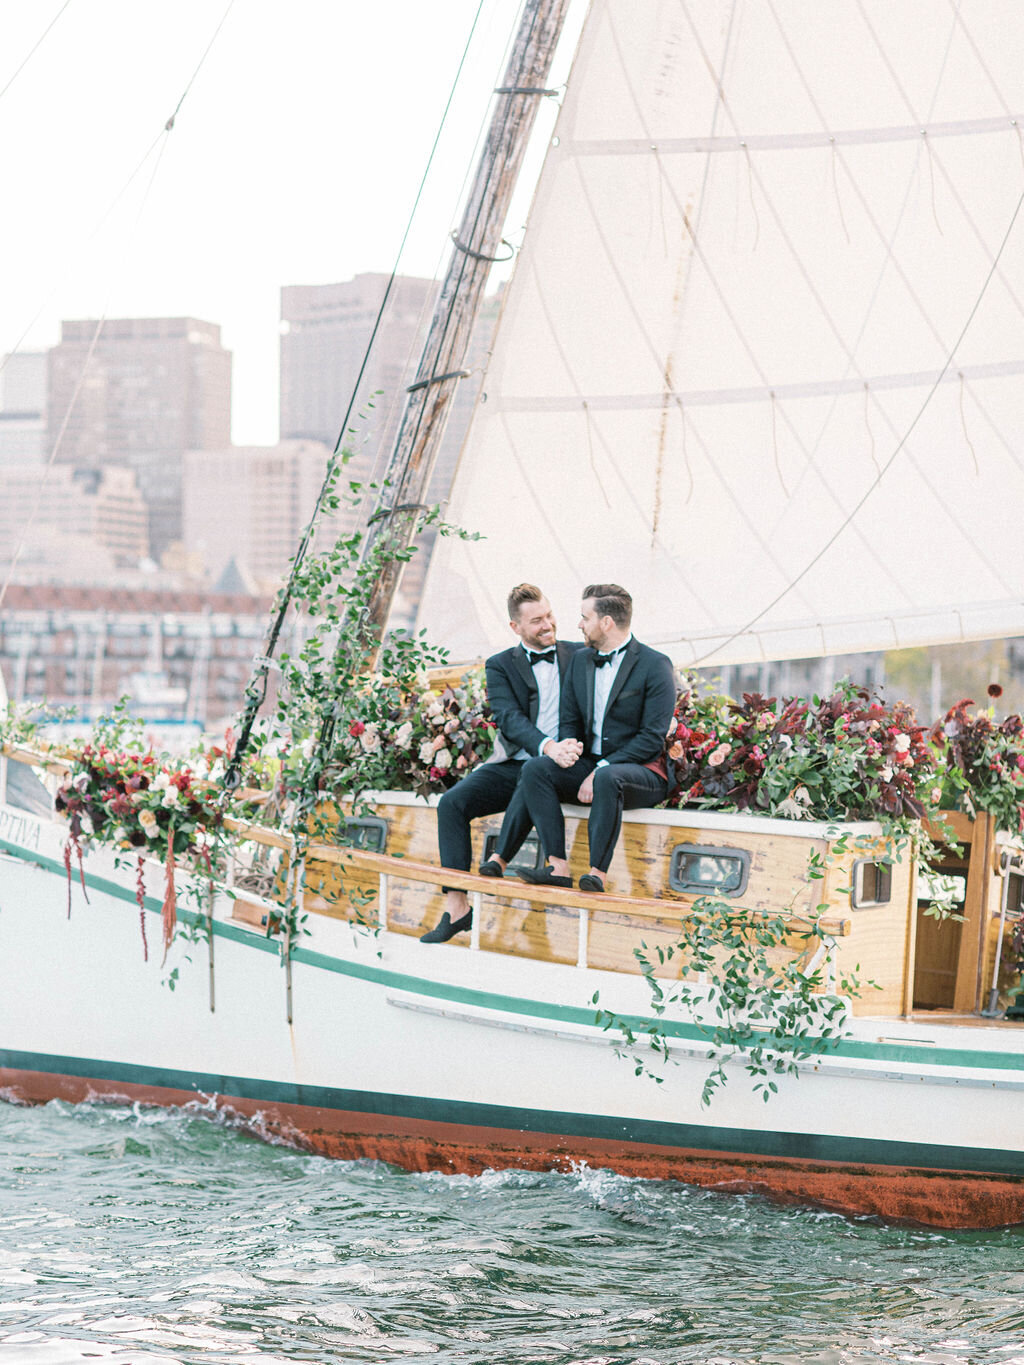 Kate-Murtaugh-Events-Boston-Harbor-sail-boat-yacht-elopement-wedding-planner-coastal-ocean-sail